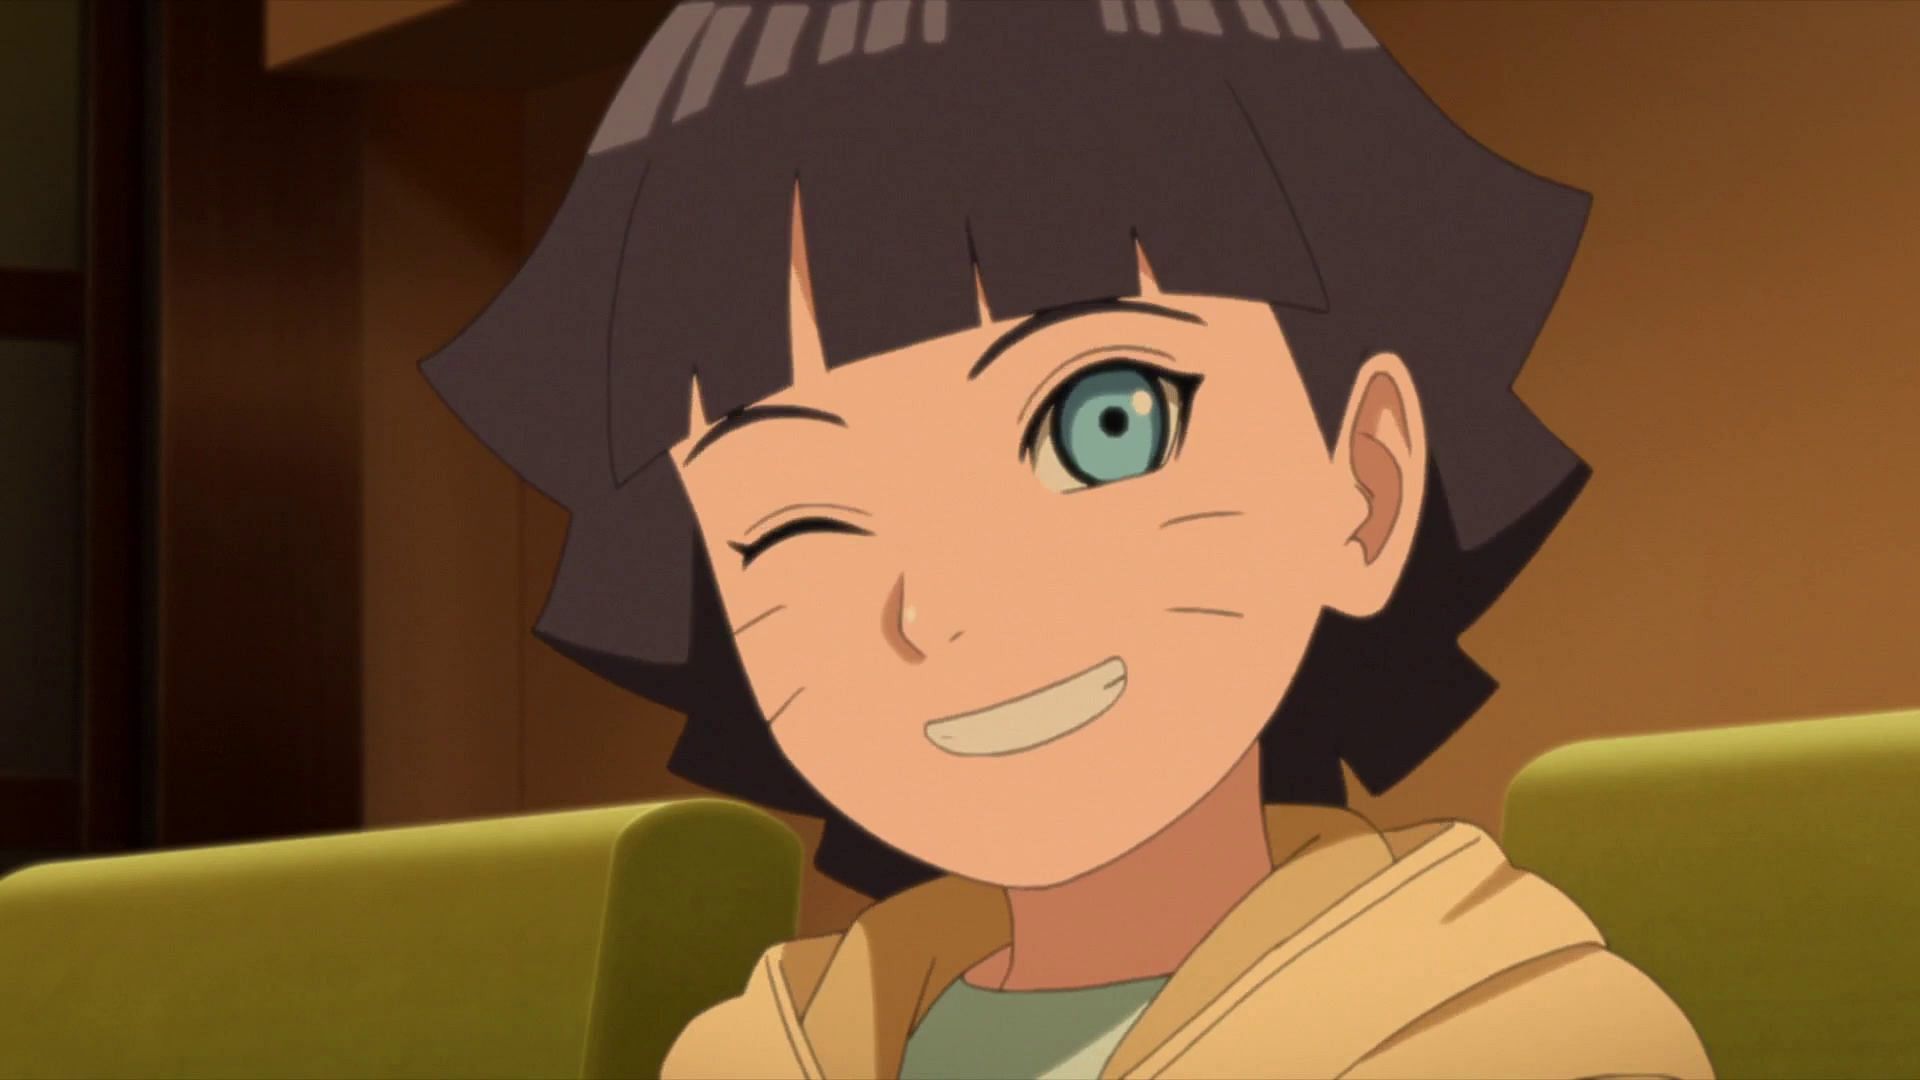 Himawari Uzumaki as seen in the anime series (Image via Studio Pierrot)